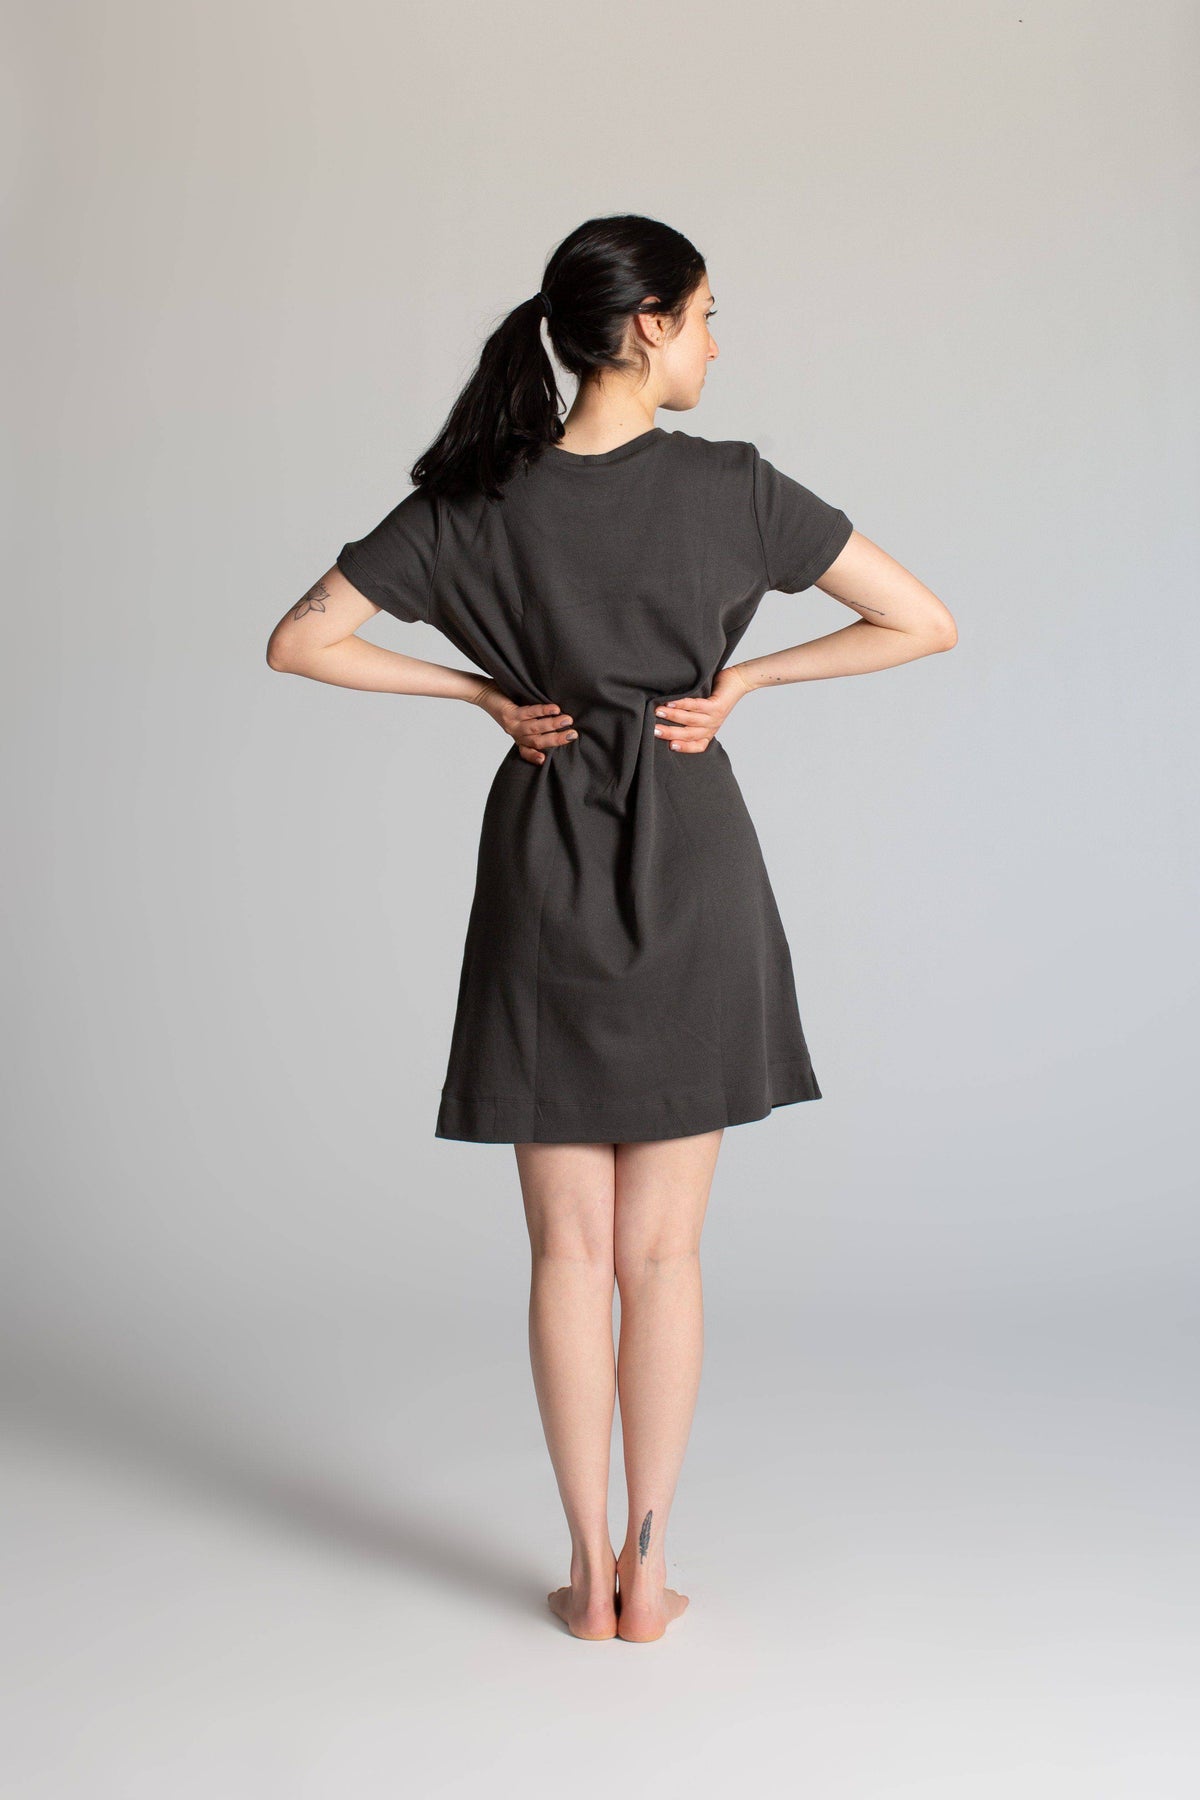 Limited Edition Box Dress - womens clothing - Ripple Yoga Wear